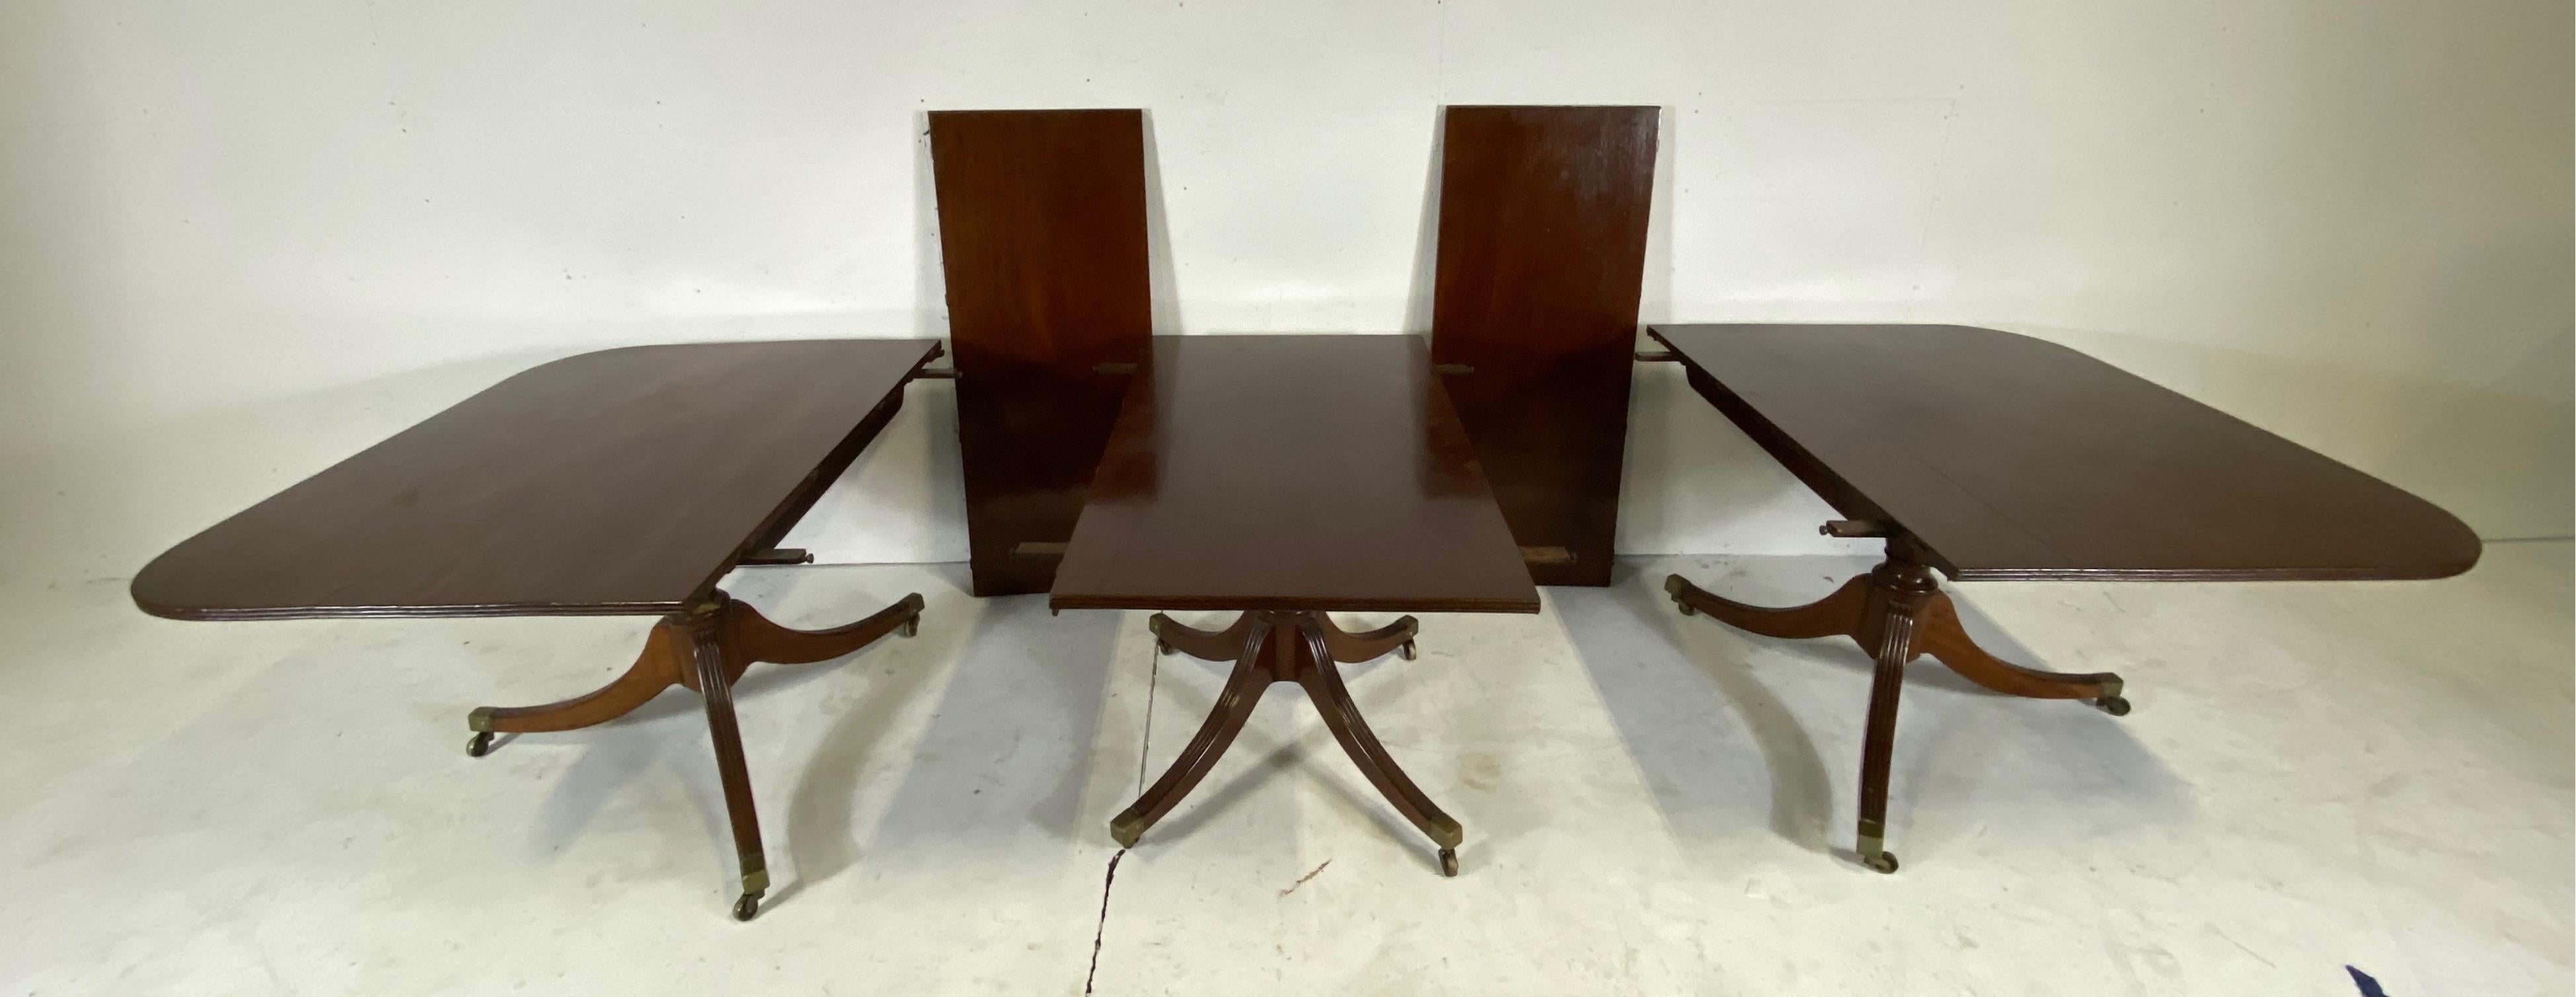 Fine Early 19th Century English Mahogany Triple Pedestal Dining Table 5